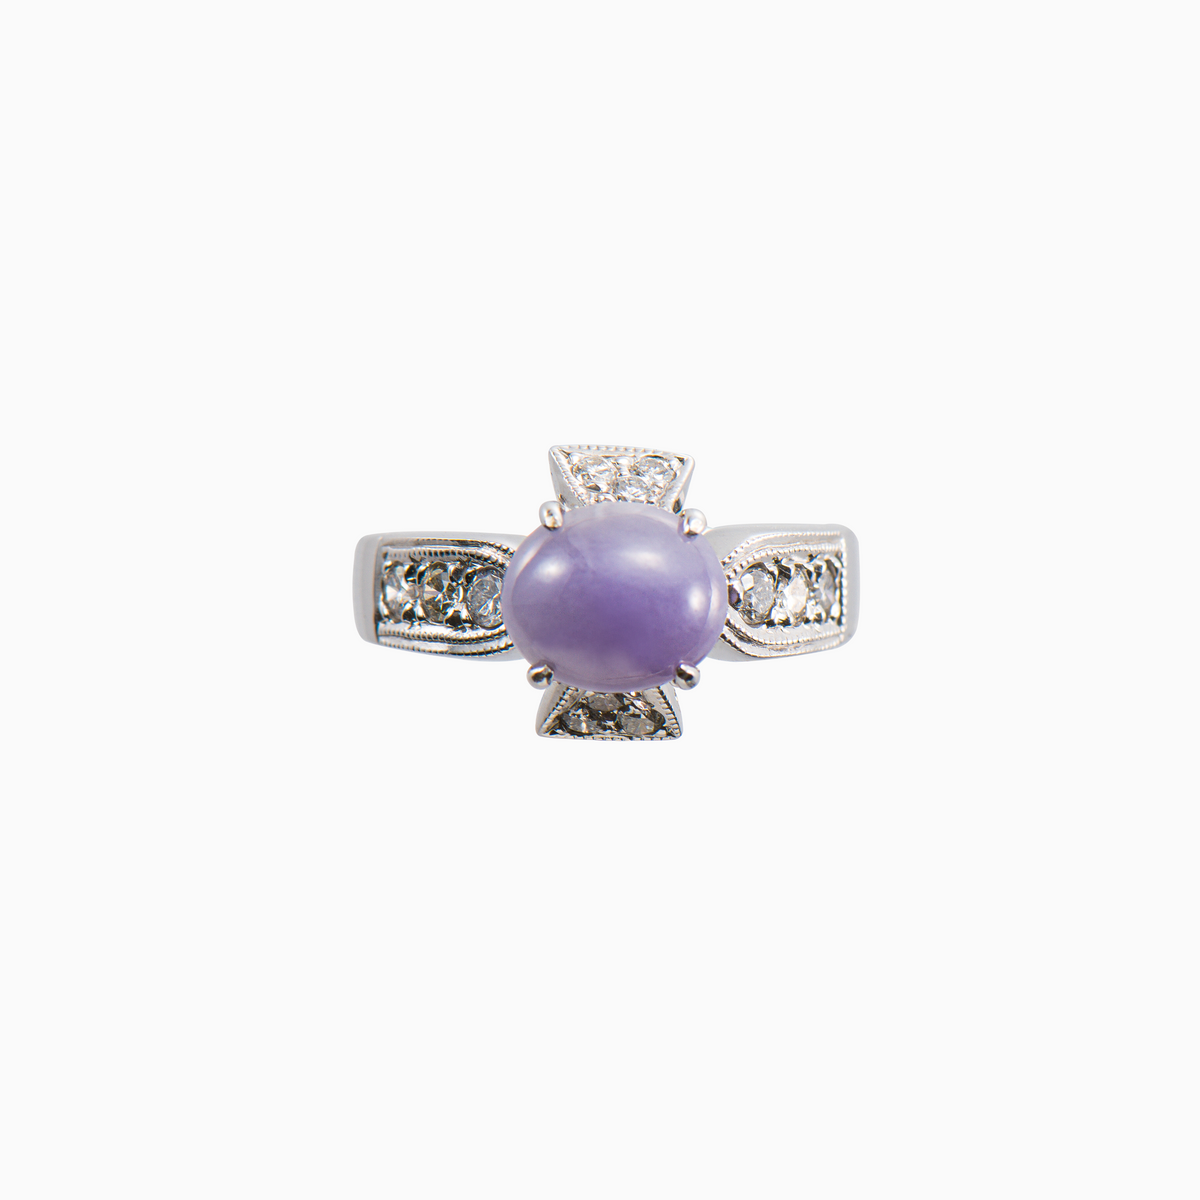 Lavender Jadeite Ring with Diamonds